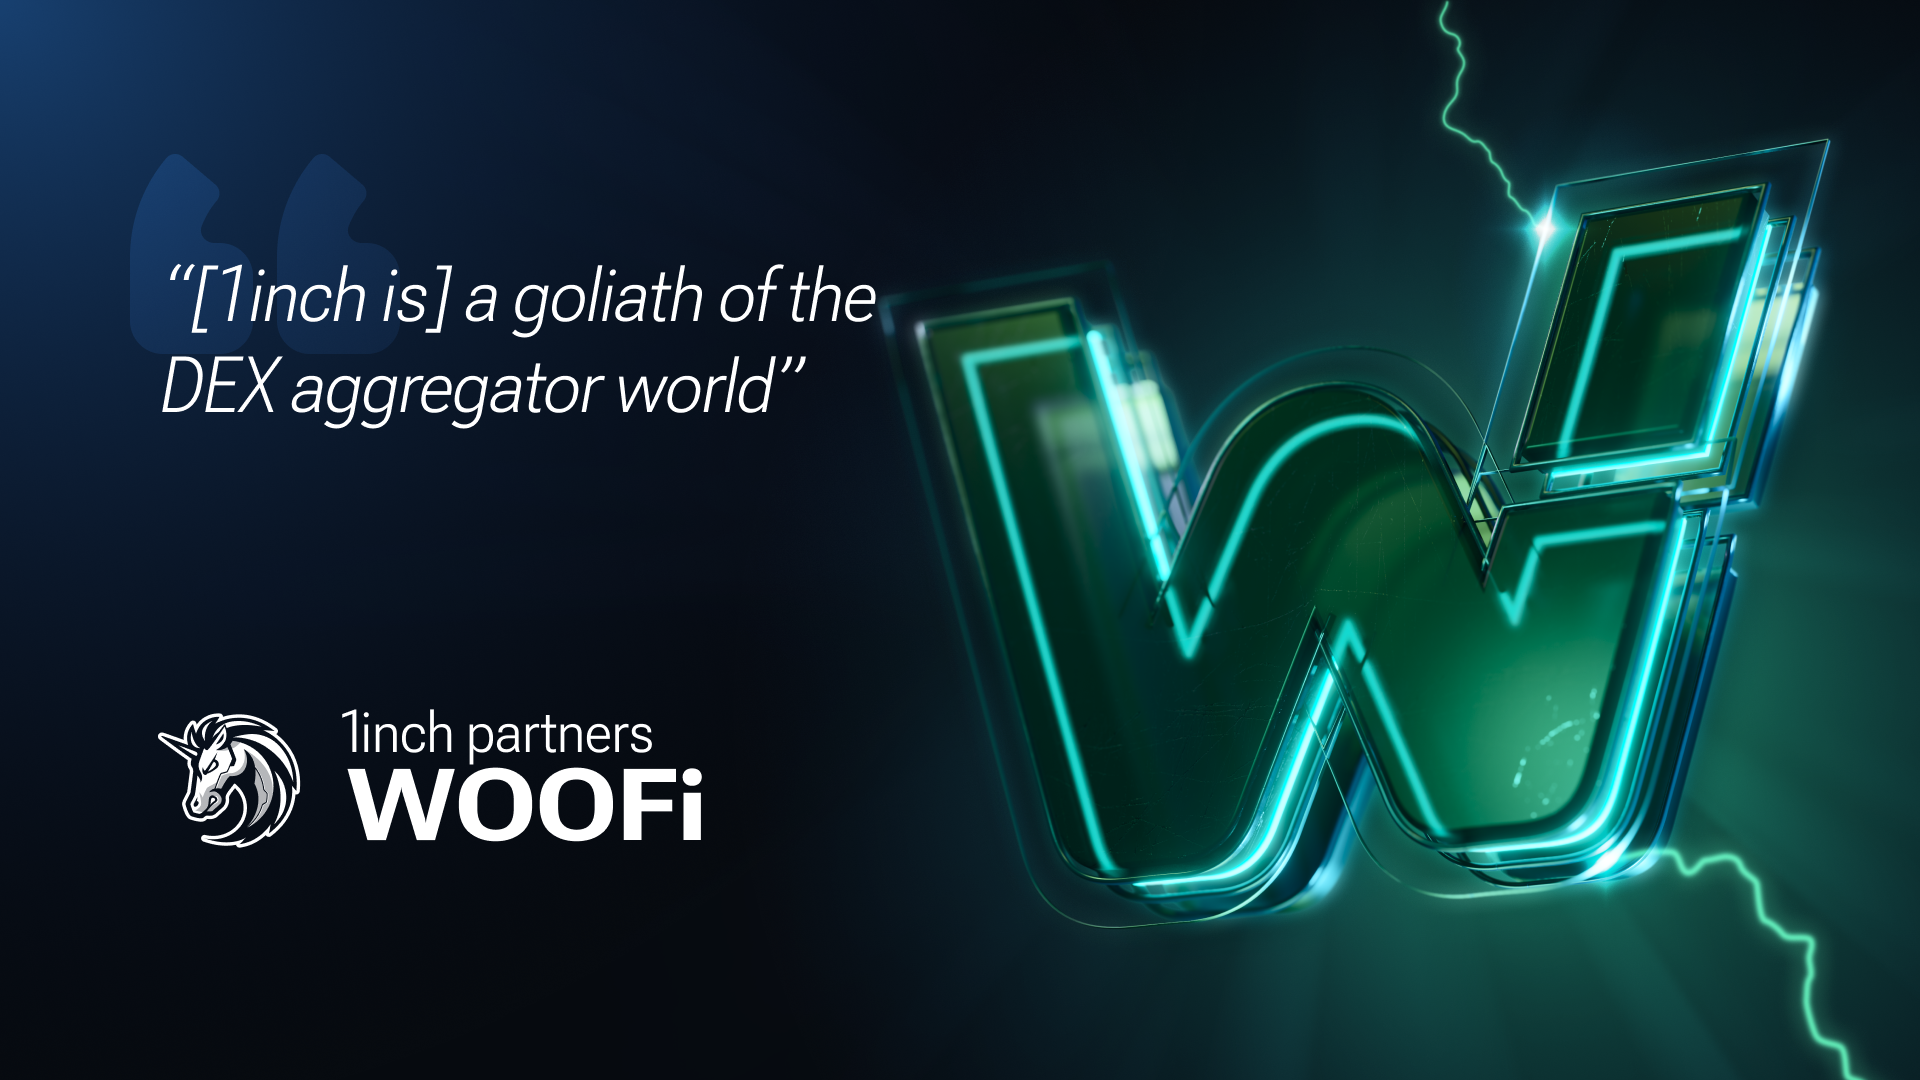 WOOFi: "[1inch is] a goliath of the DEX aggregator world”